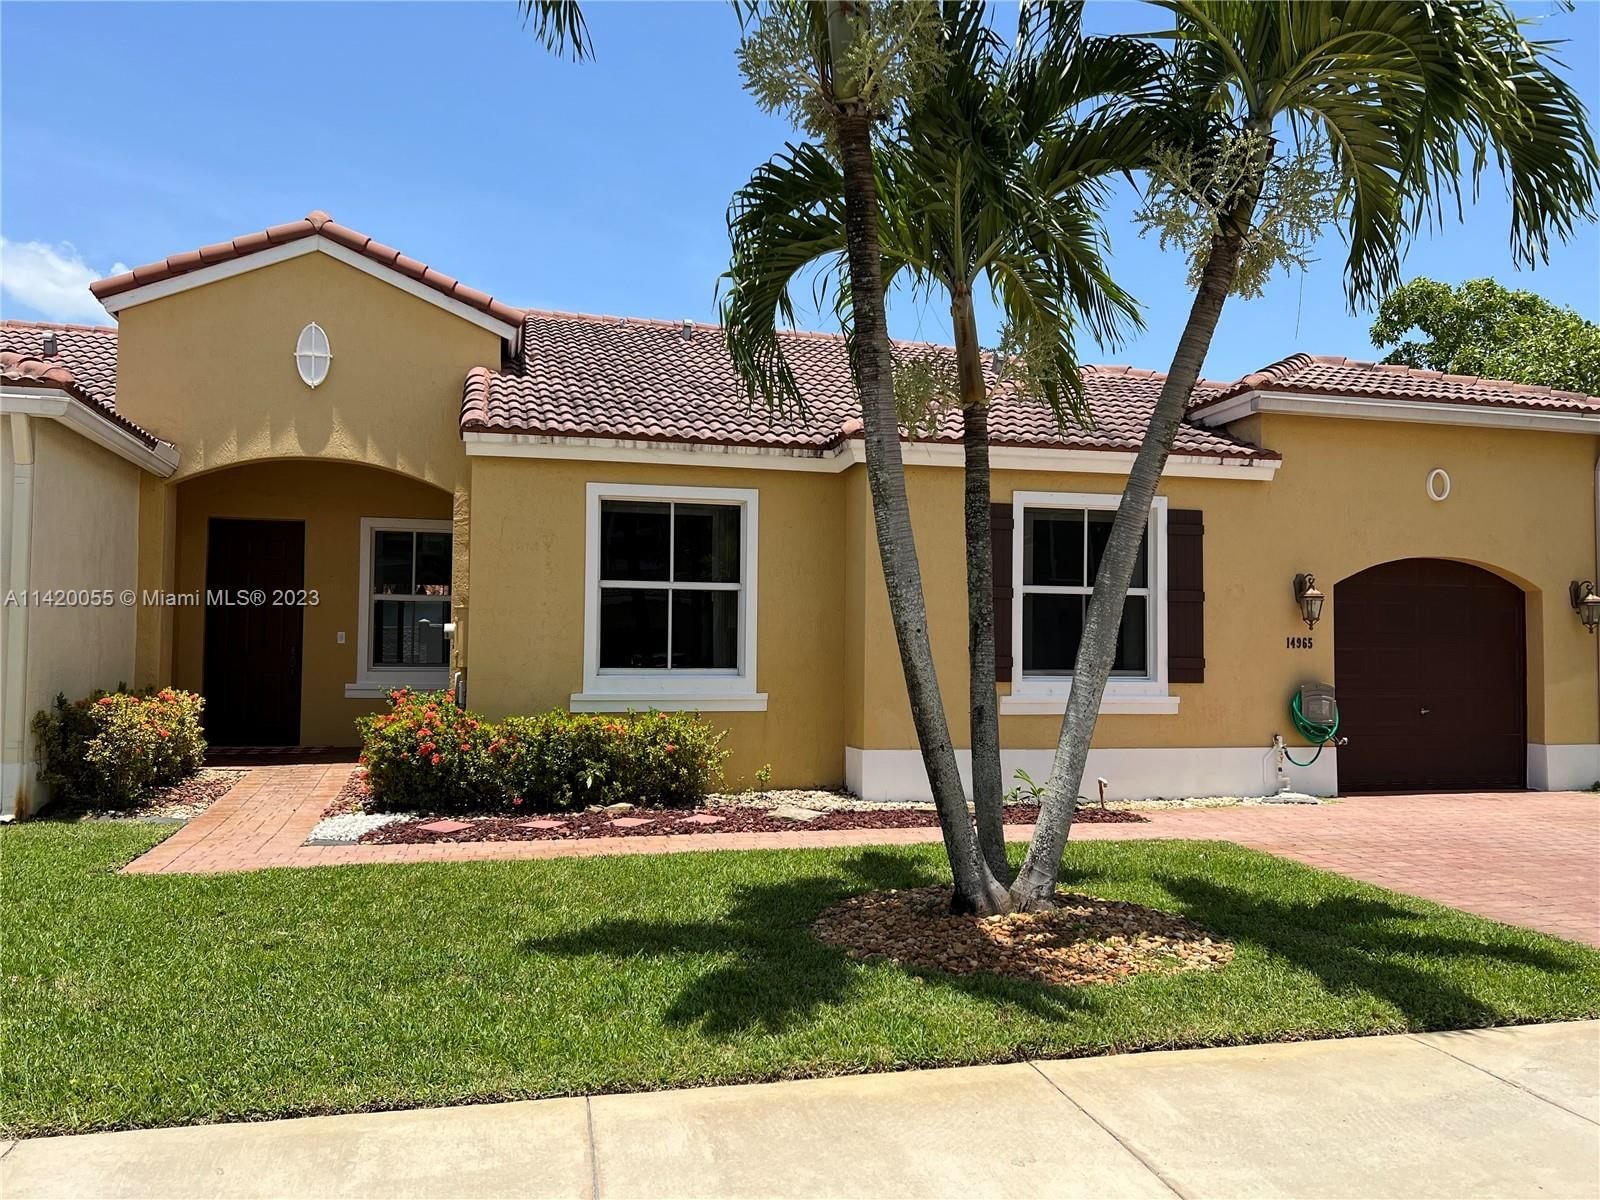 Real estate property located at 14965 SW 40 St, Miami-Dade County, Miami, FL